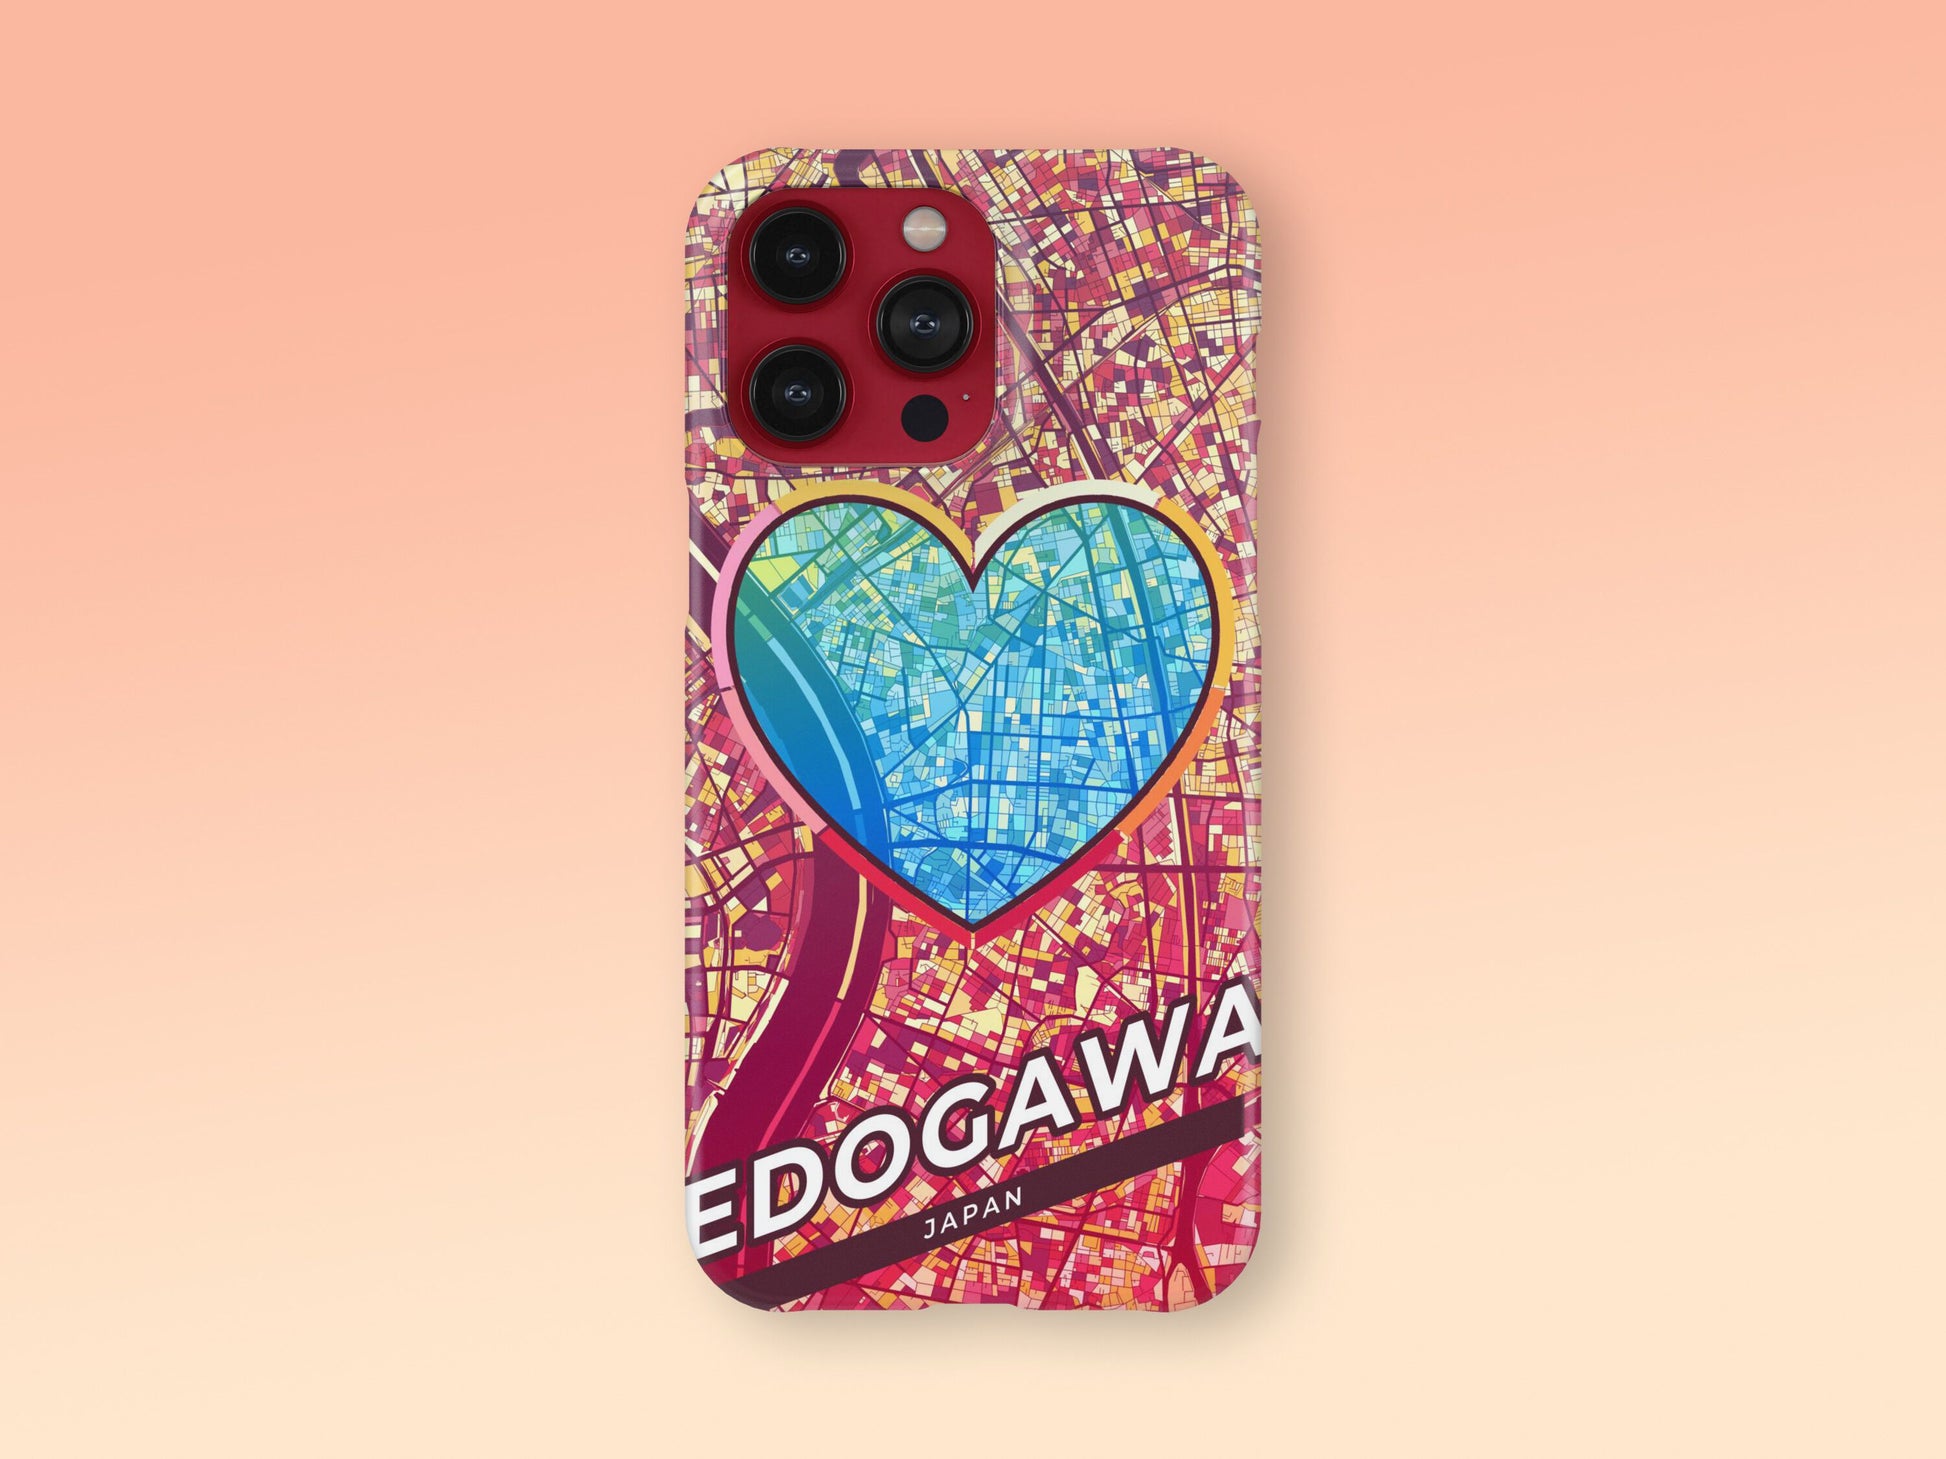 Edogawa Japan slim phone case with colorful icon. Birthday, wedding or housewarming gift. Couple match cases. 2